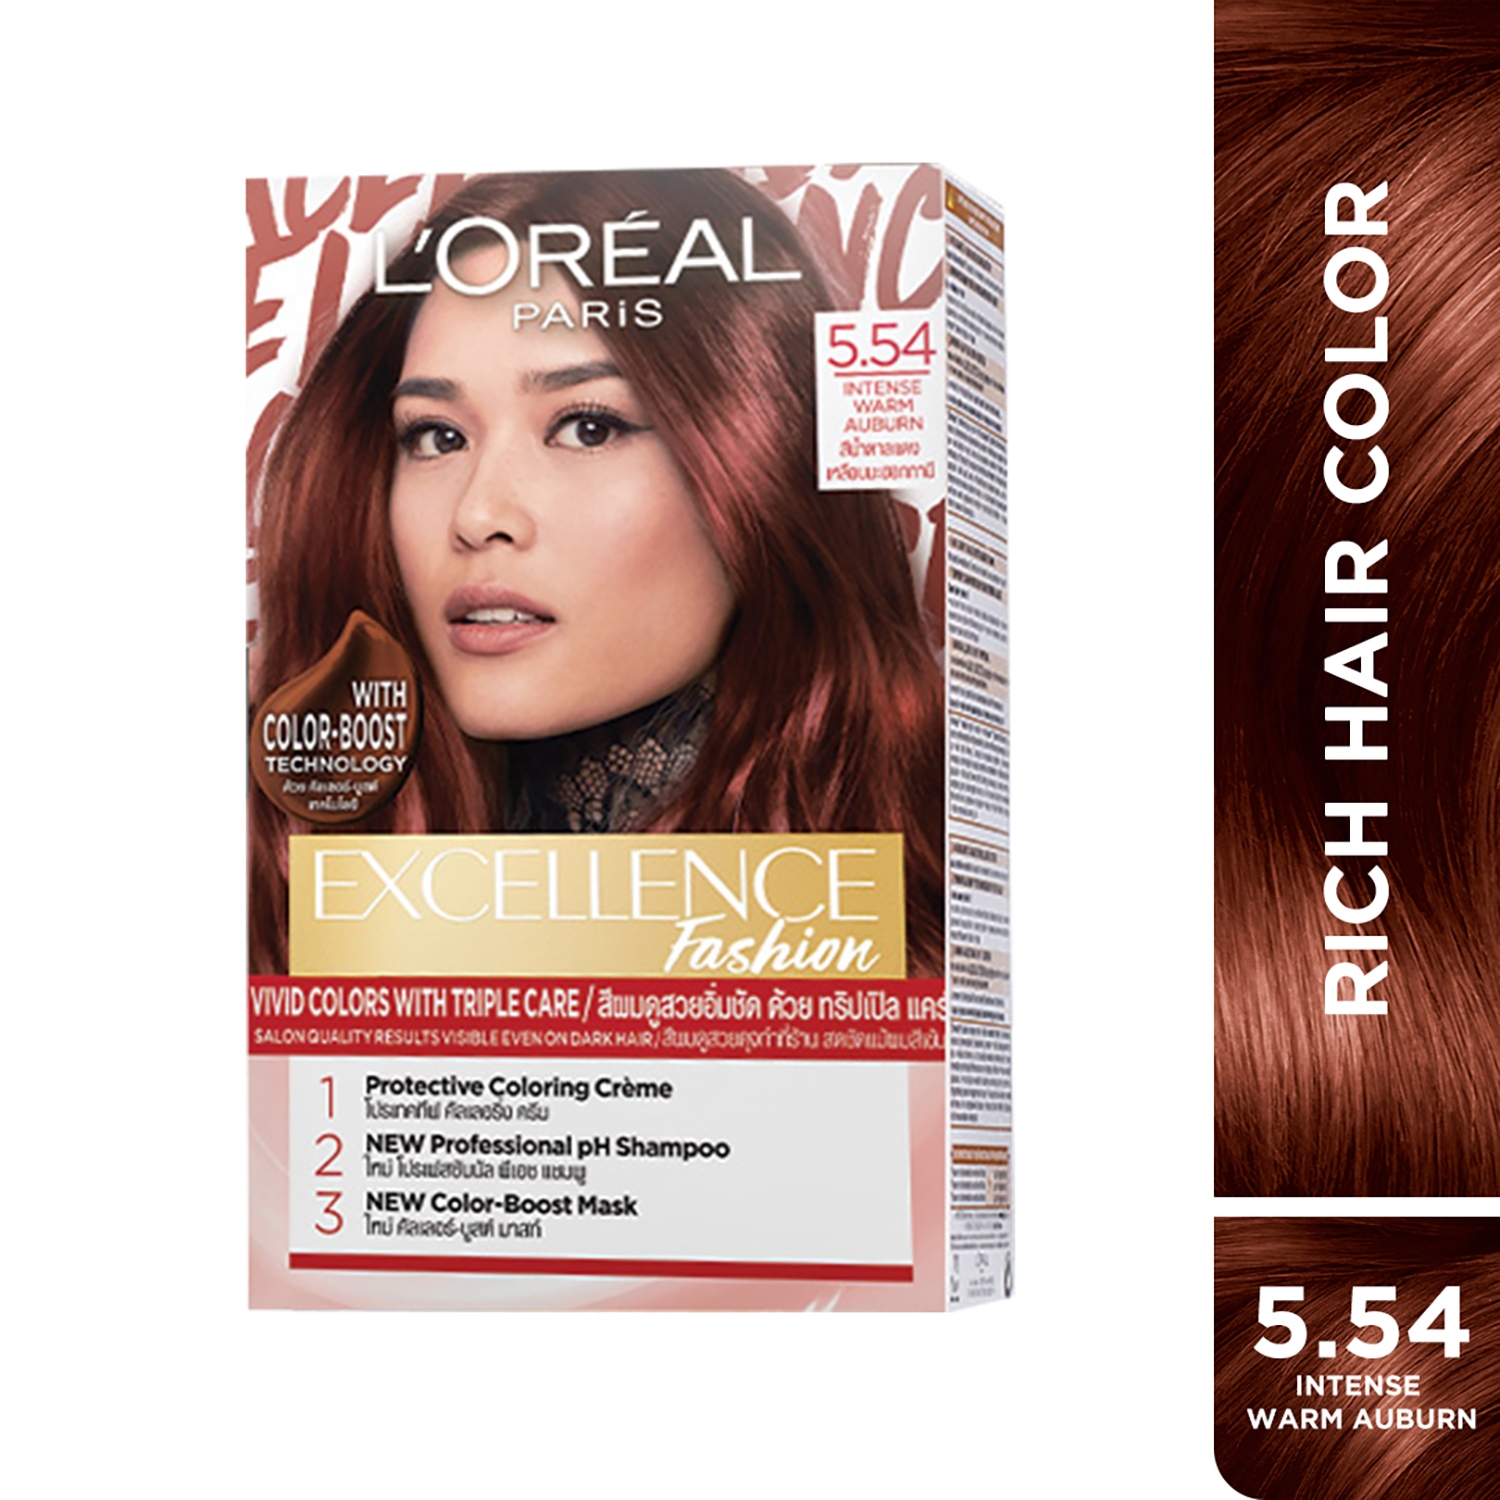 L'Oreal Paris | L'Oreal Paris Excellence Fashion Highlights Hair Color, 5.54 Intense Warm Auburn